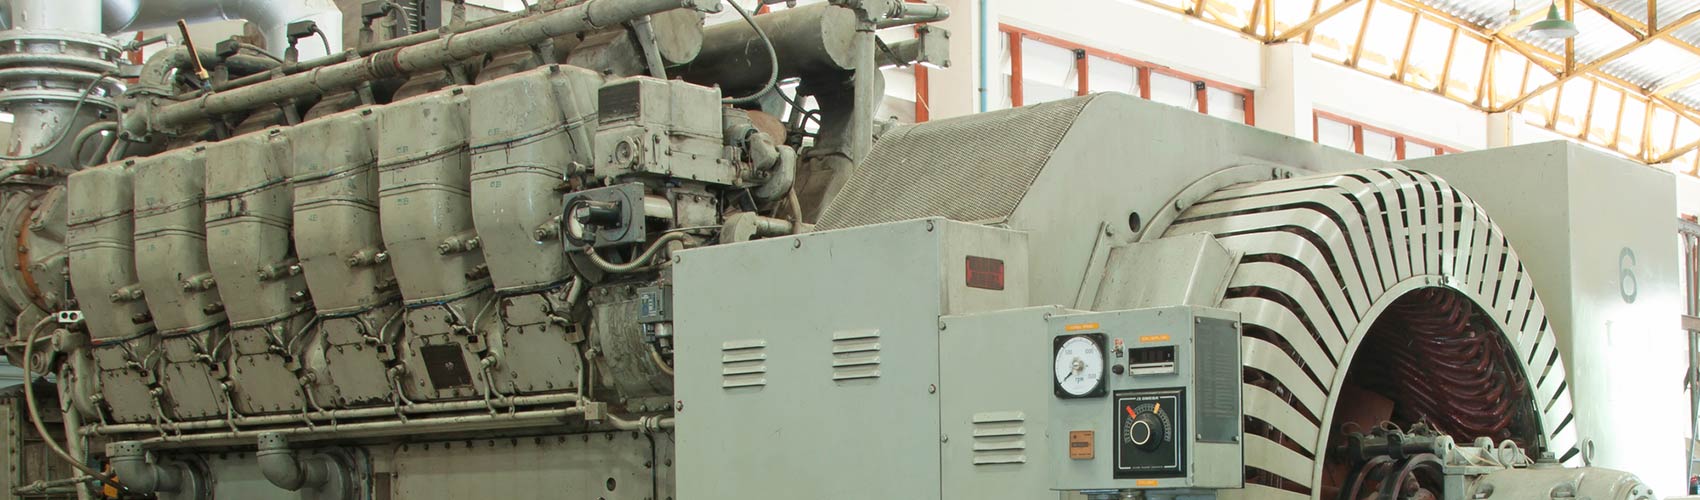 Massive diesel generator in hospital